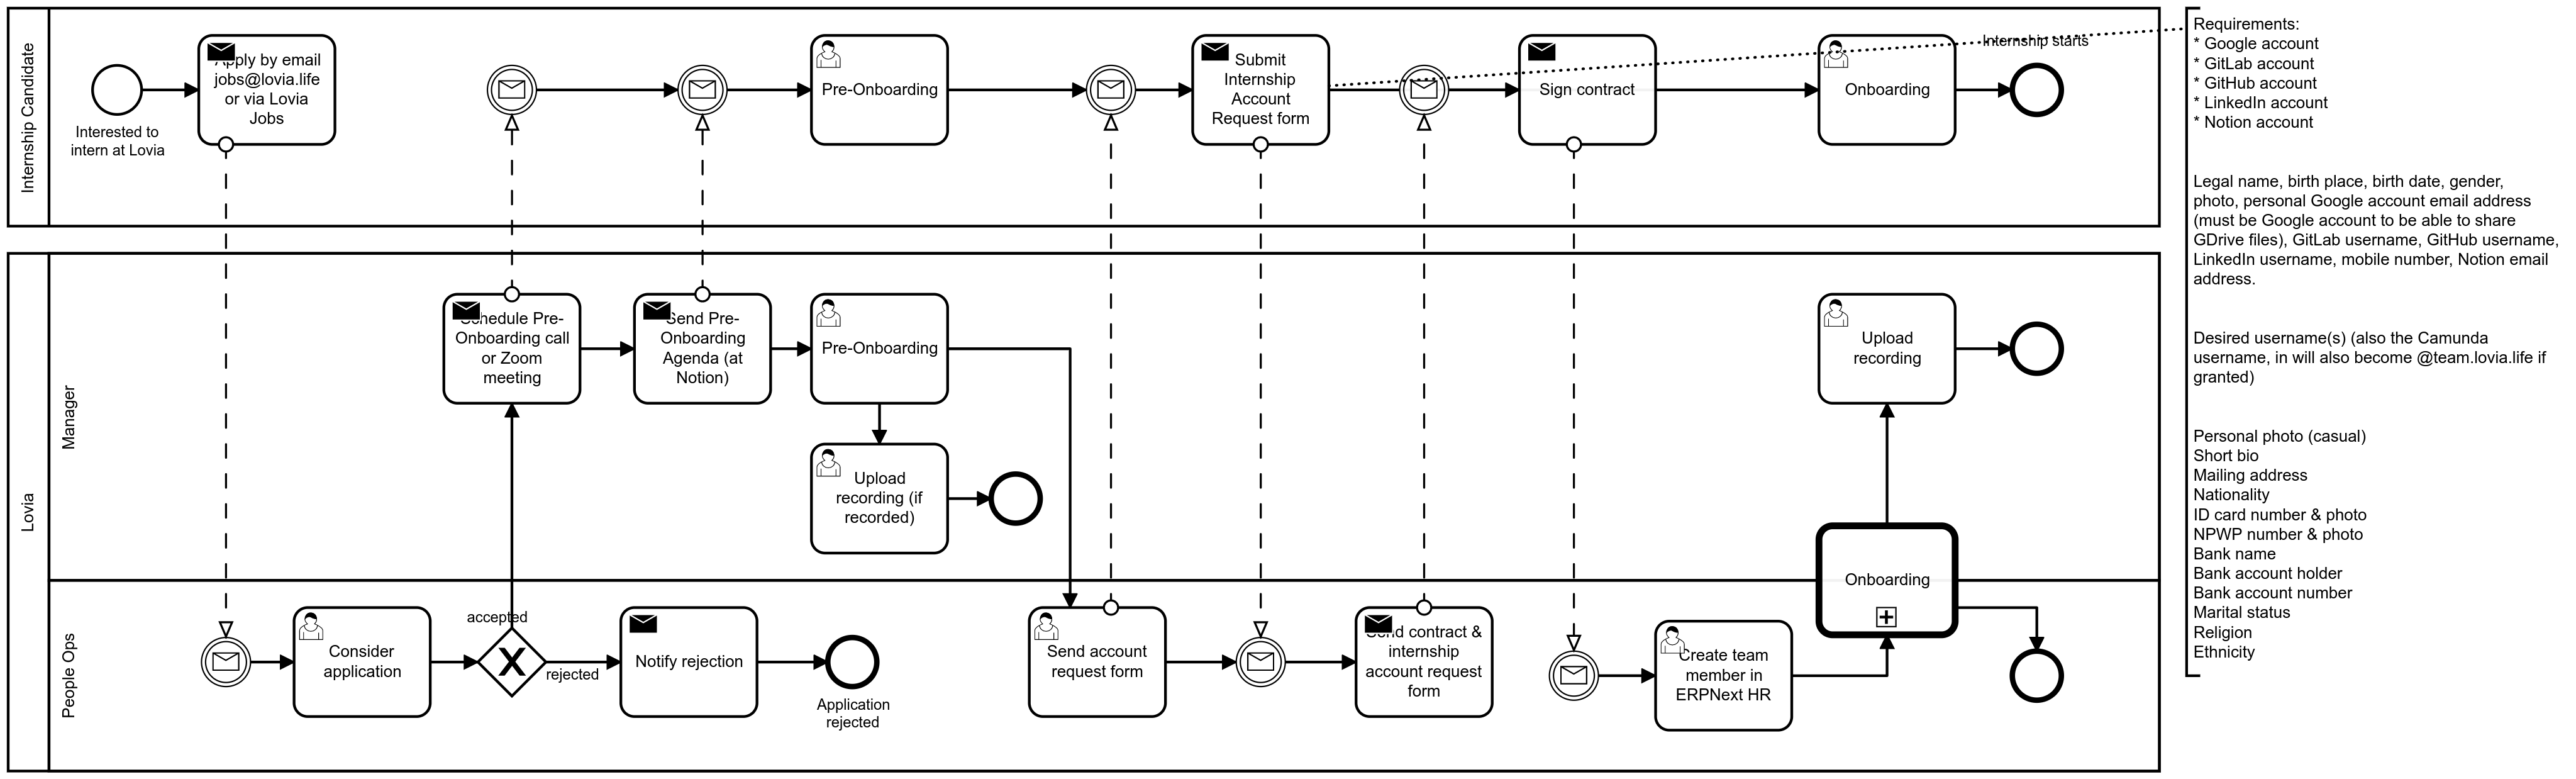 Internship Application BPMN Workflow Diagram (in Lovia Cawemo)